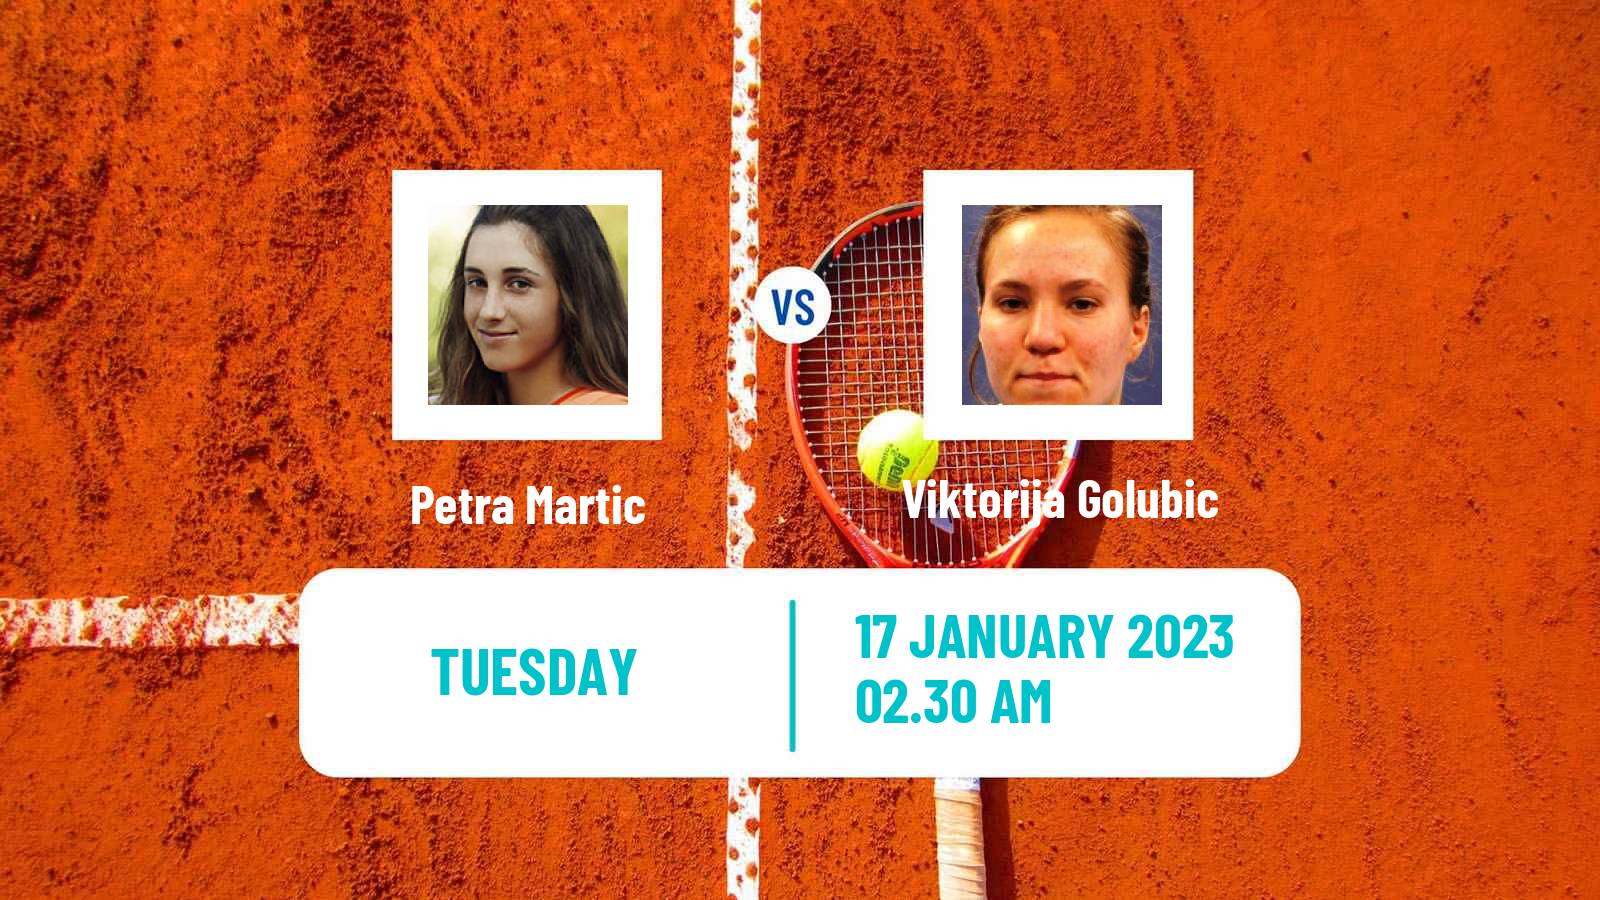 Tennis WTA Australian Open Petra Martic - Viktorija Golubic